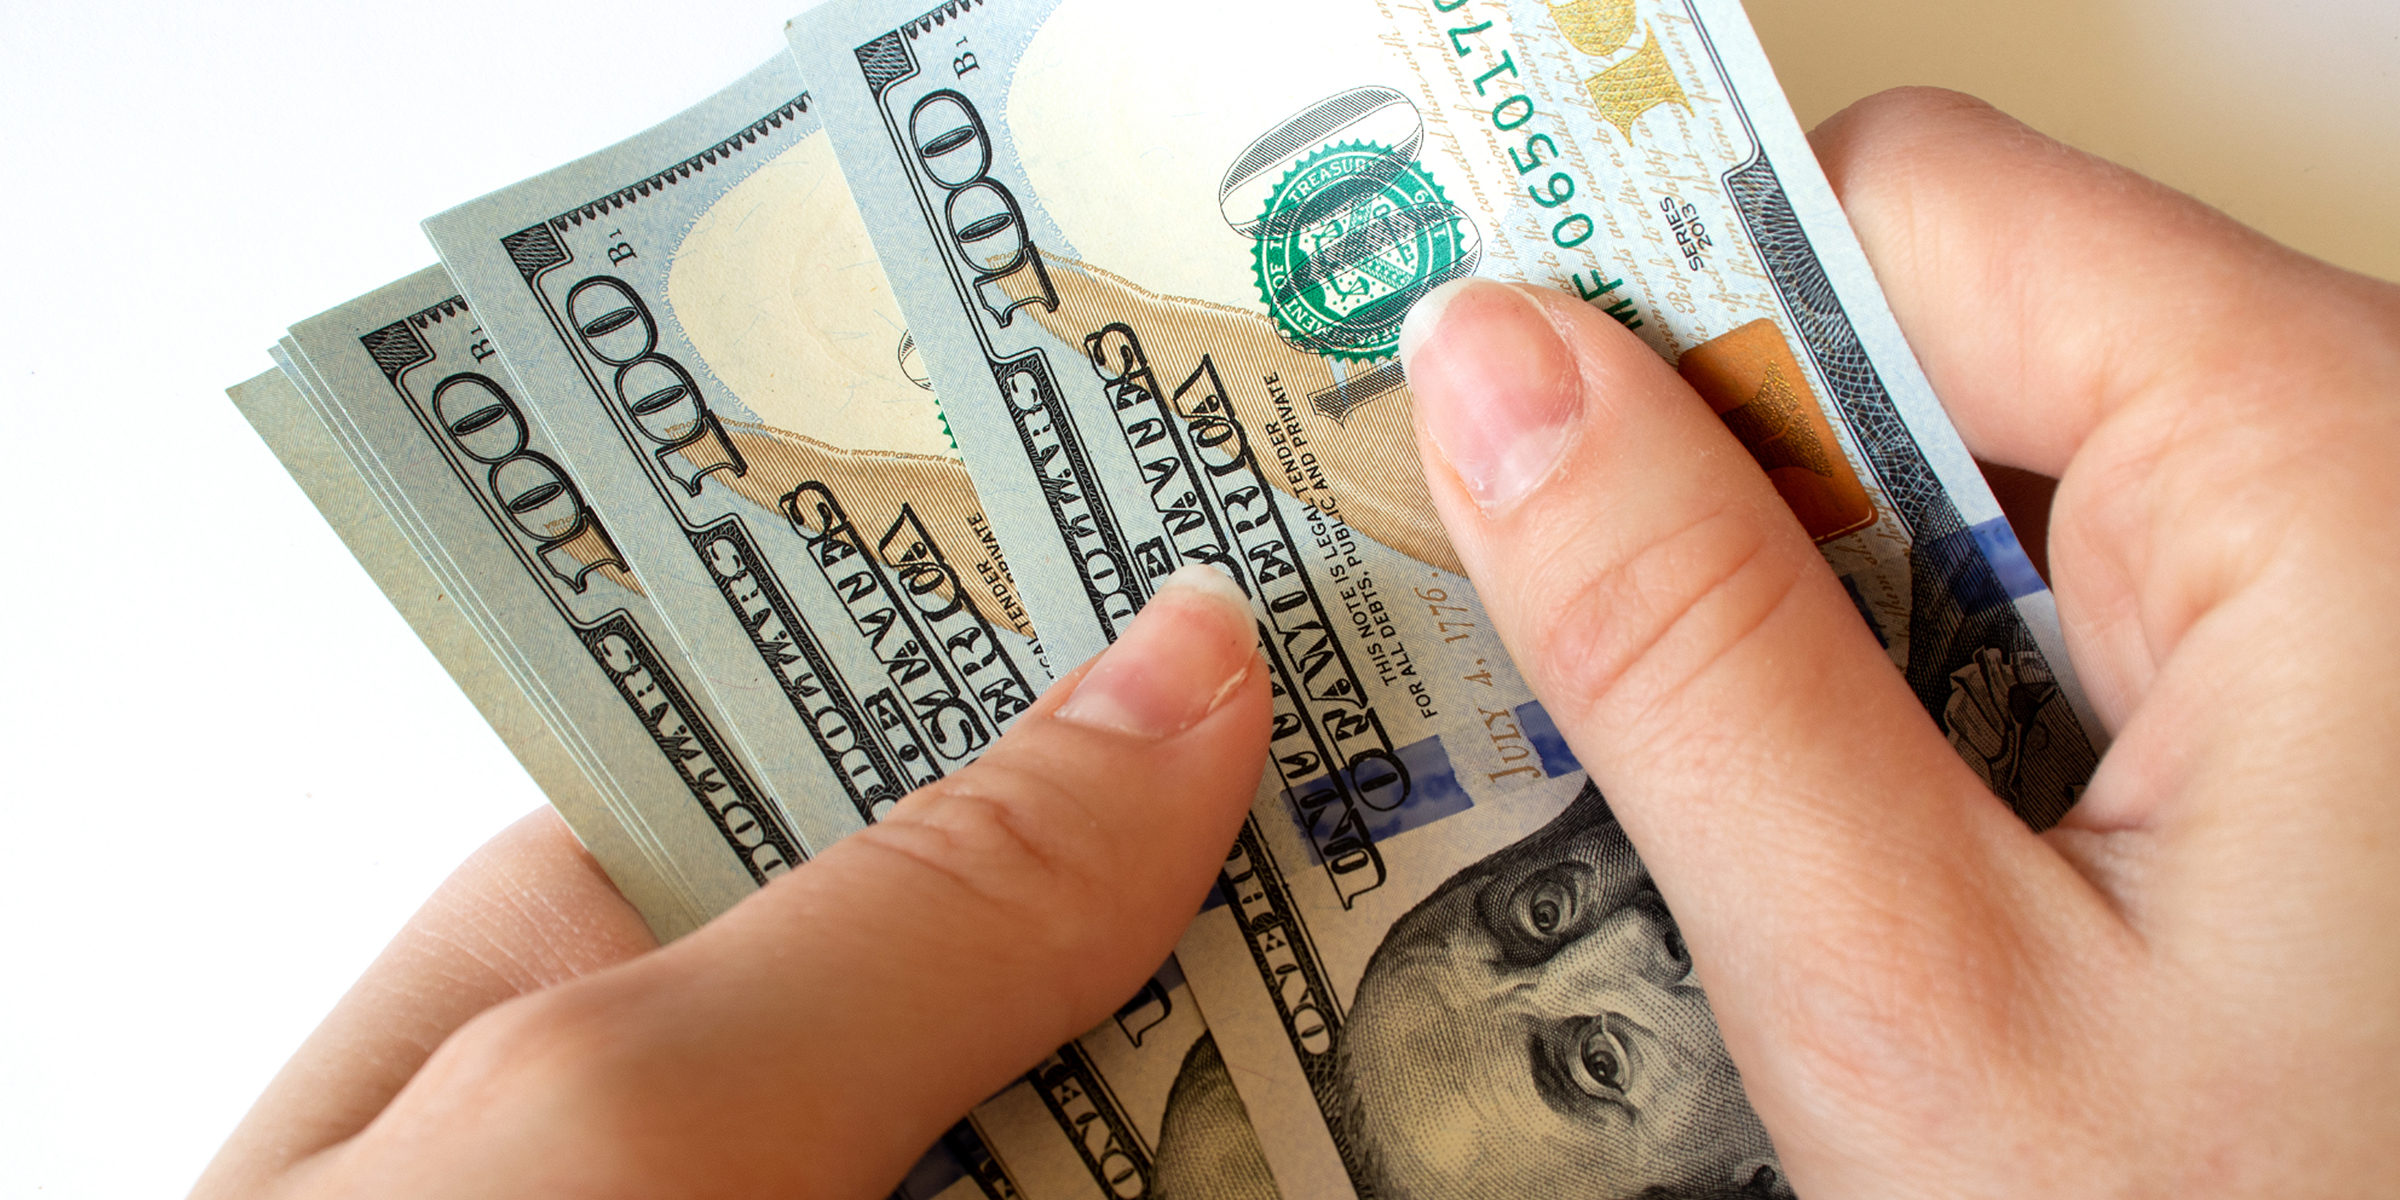 A person holding $100 bills | Source: Shutterstock